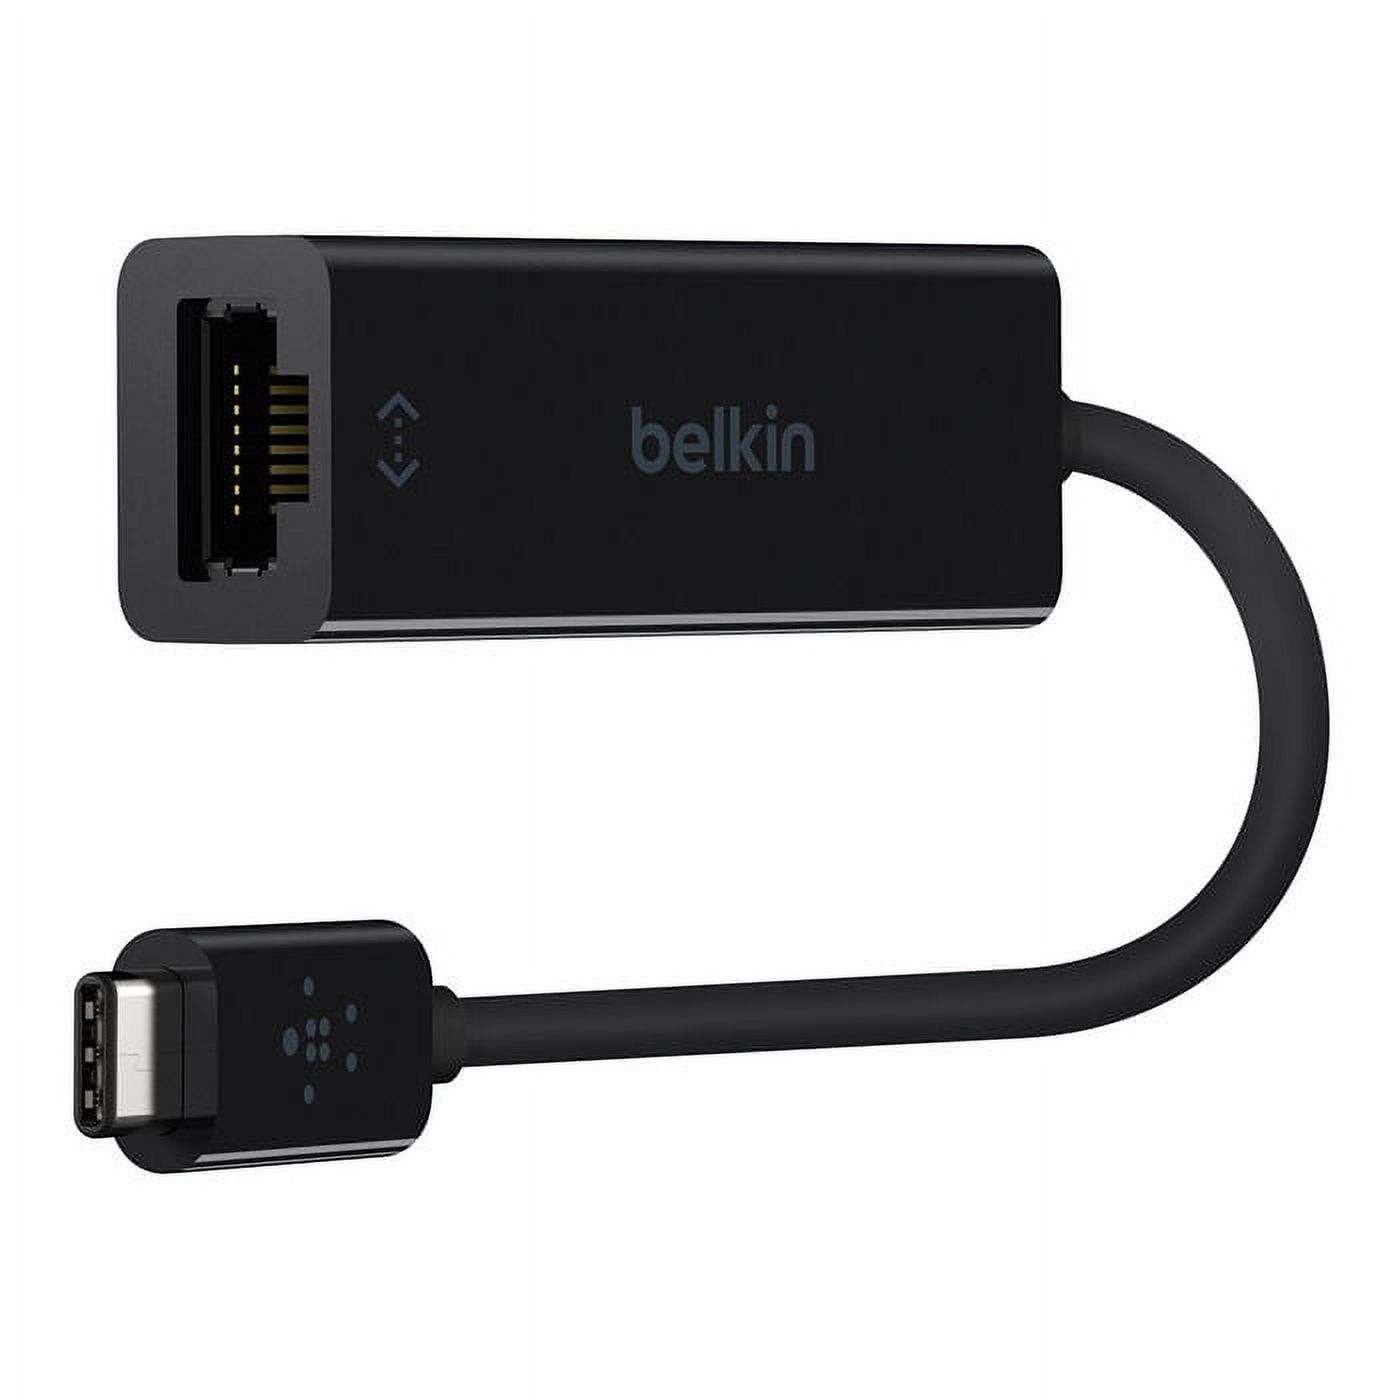 Belkin USB-C to Gigabit Ethernet Adapter - image 2 of 2